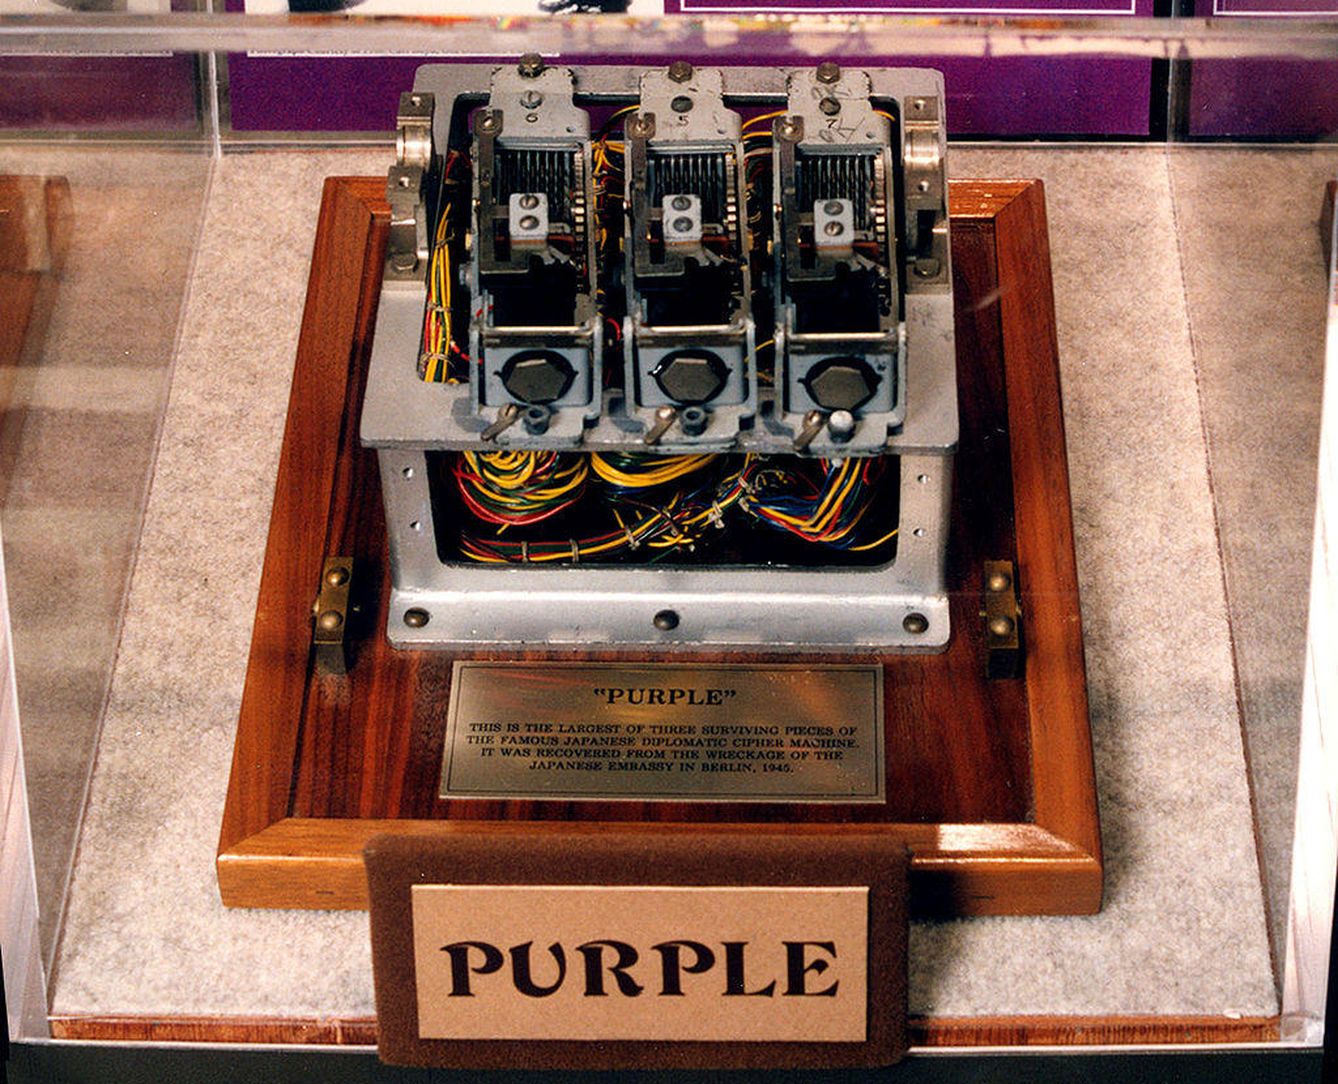 Purple. (Wikipedia)